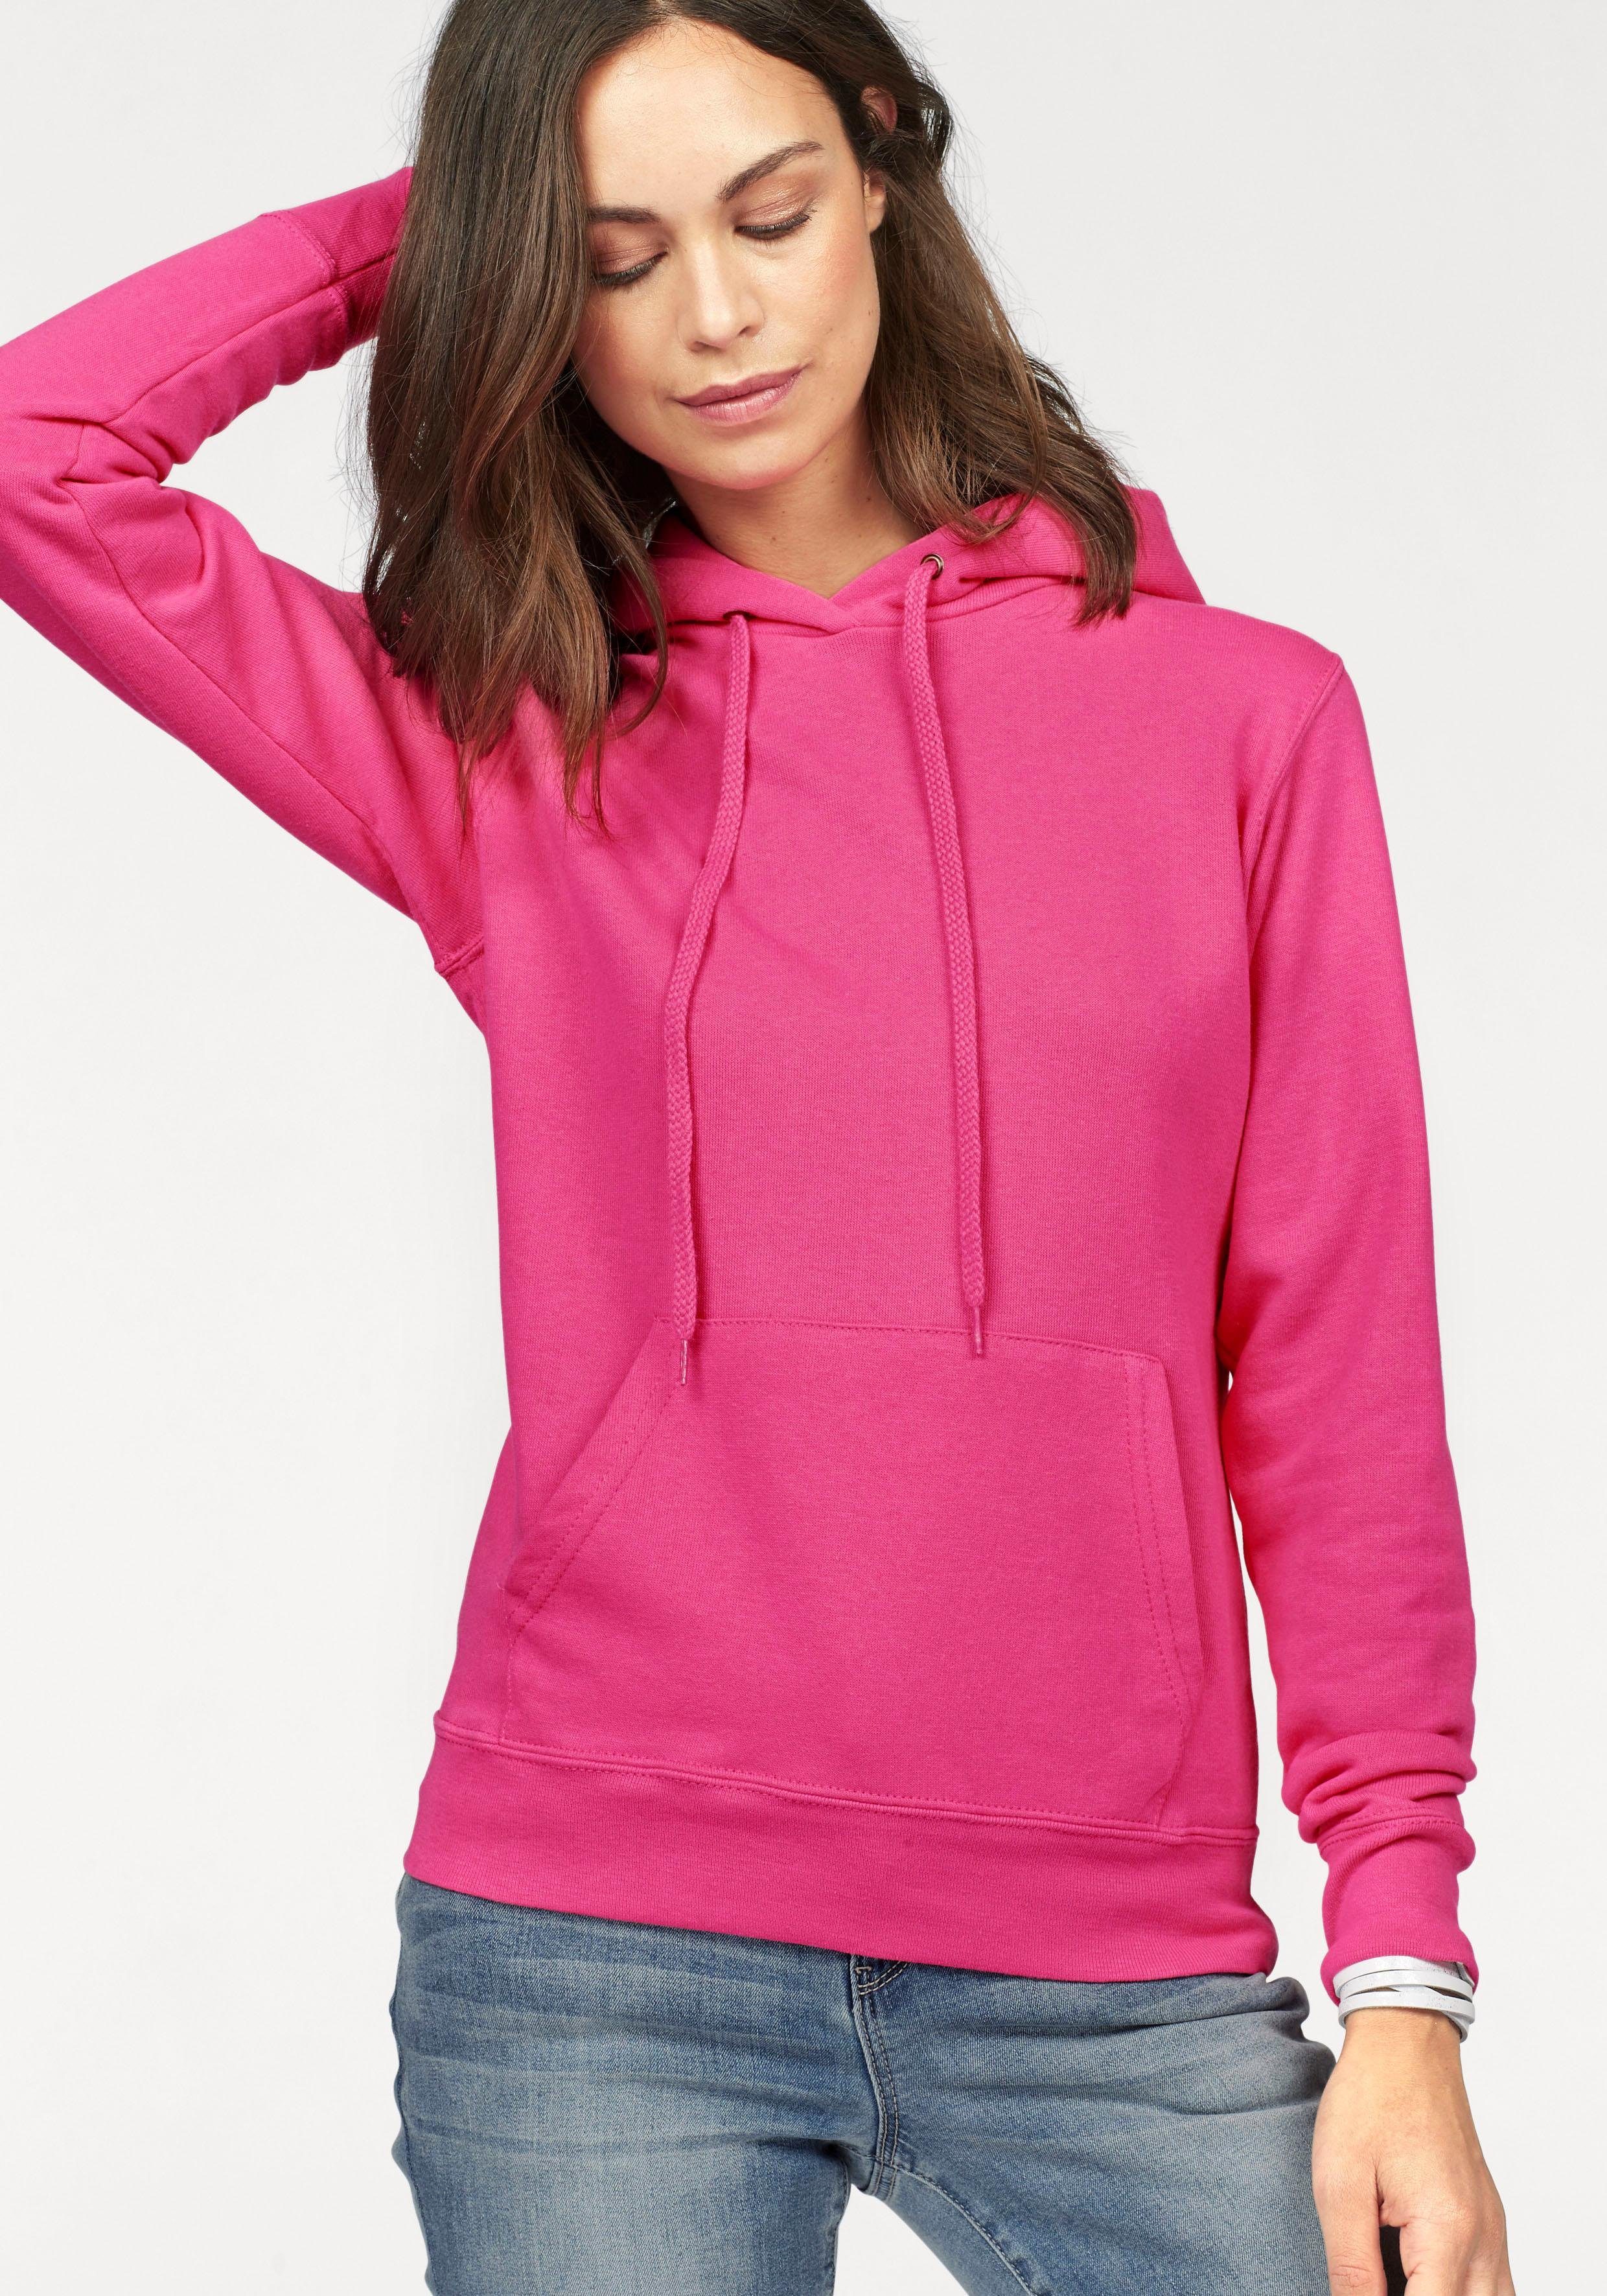 Rosa Damen-Sweatshirts kaufen » Pinkes Sweatshirt Damen-| OTTO